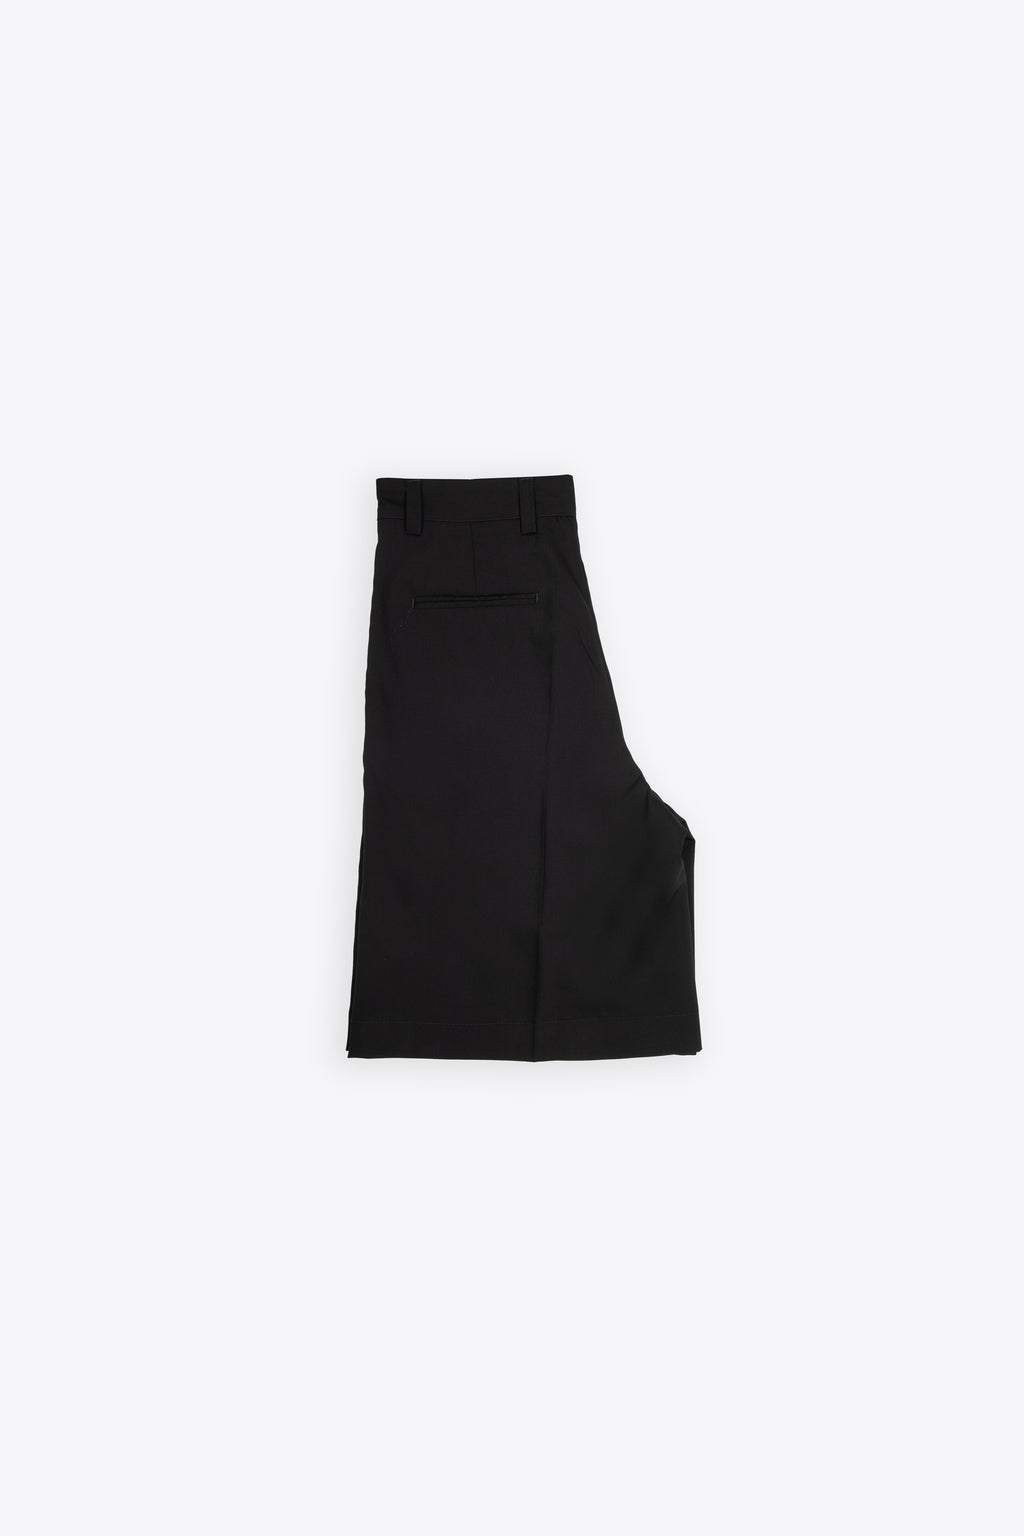 alt-image__Black-wool-tailored-pleated-shorts---Cost-Timisoara-